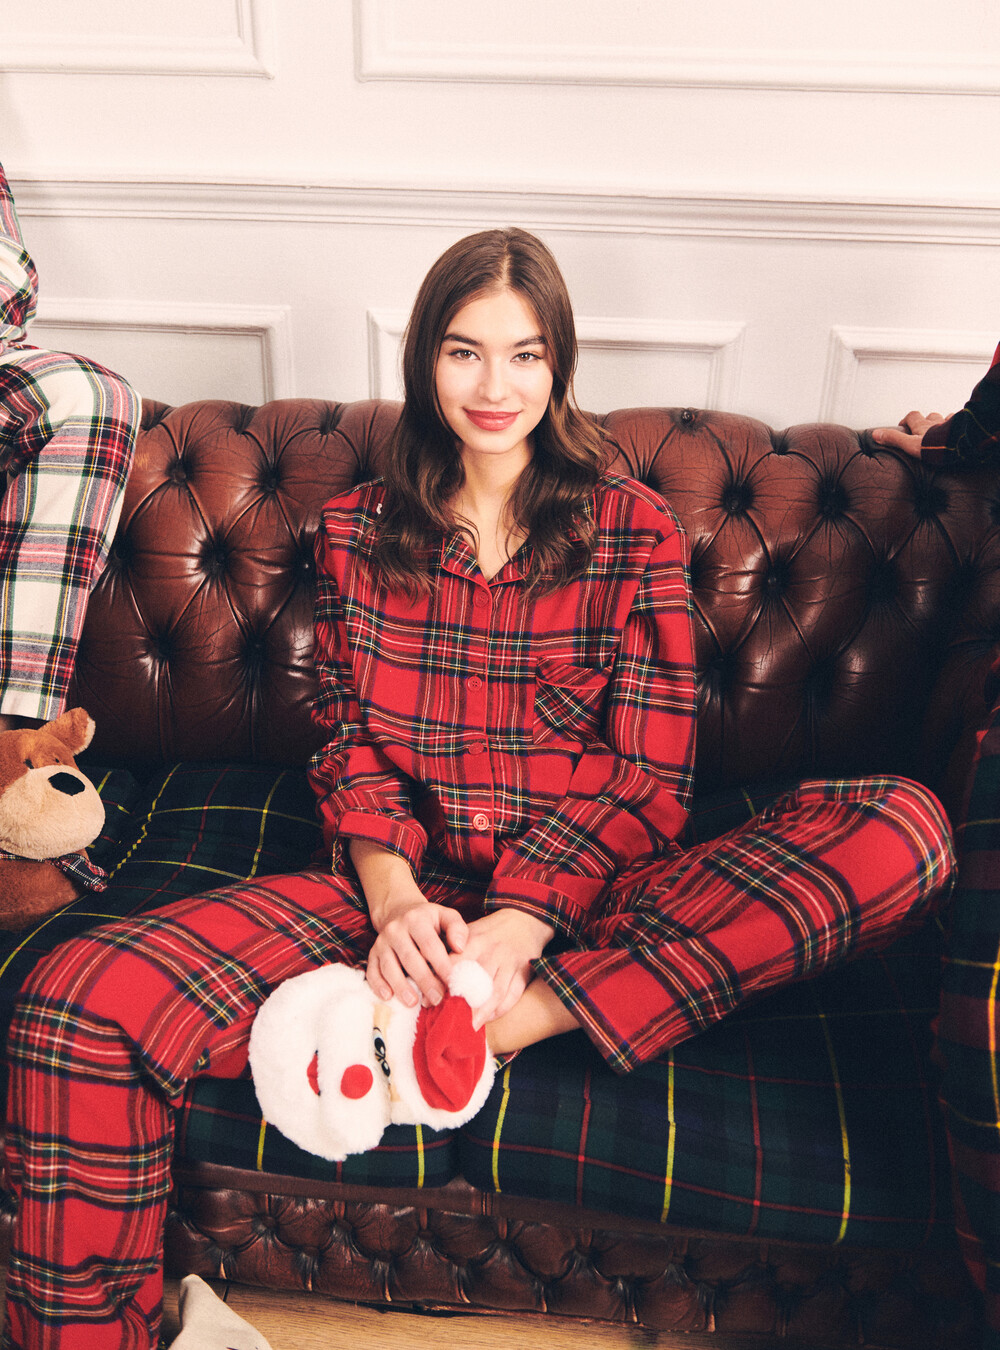 Christmas Family Collection tartan pyjamas